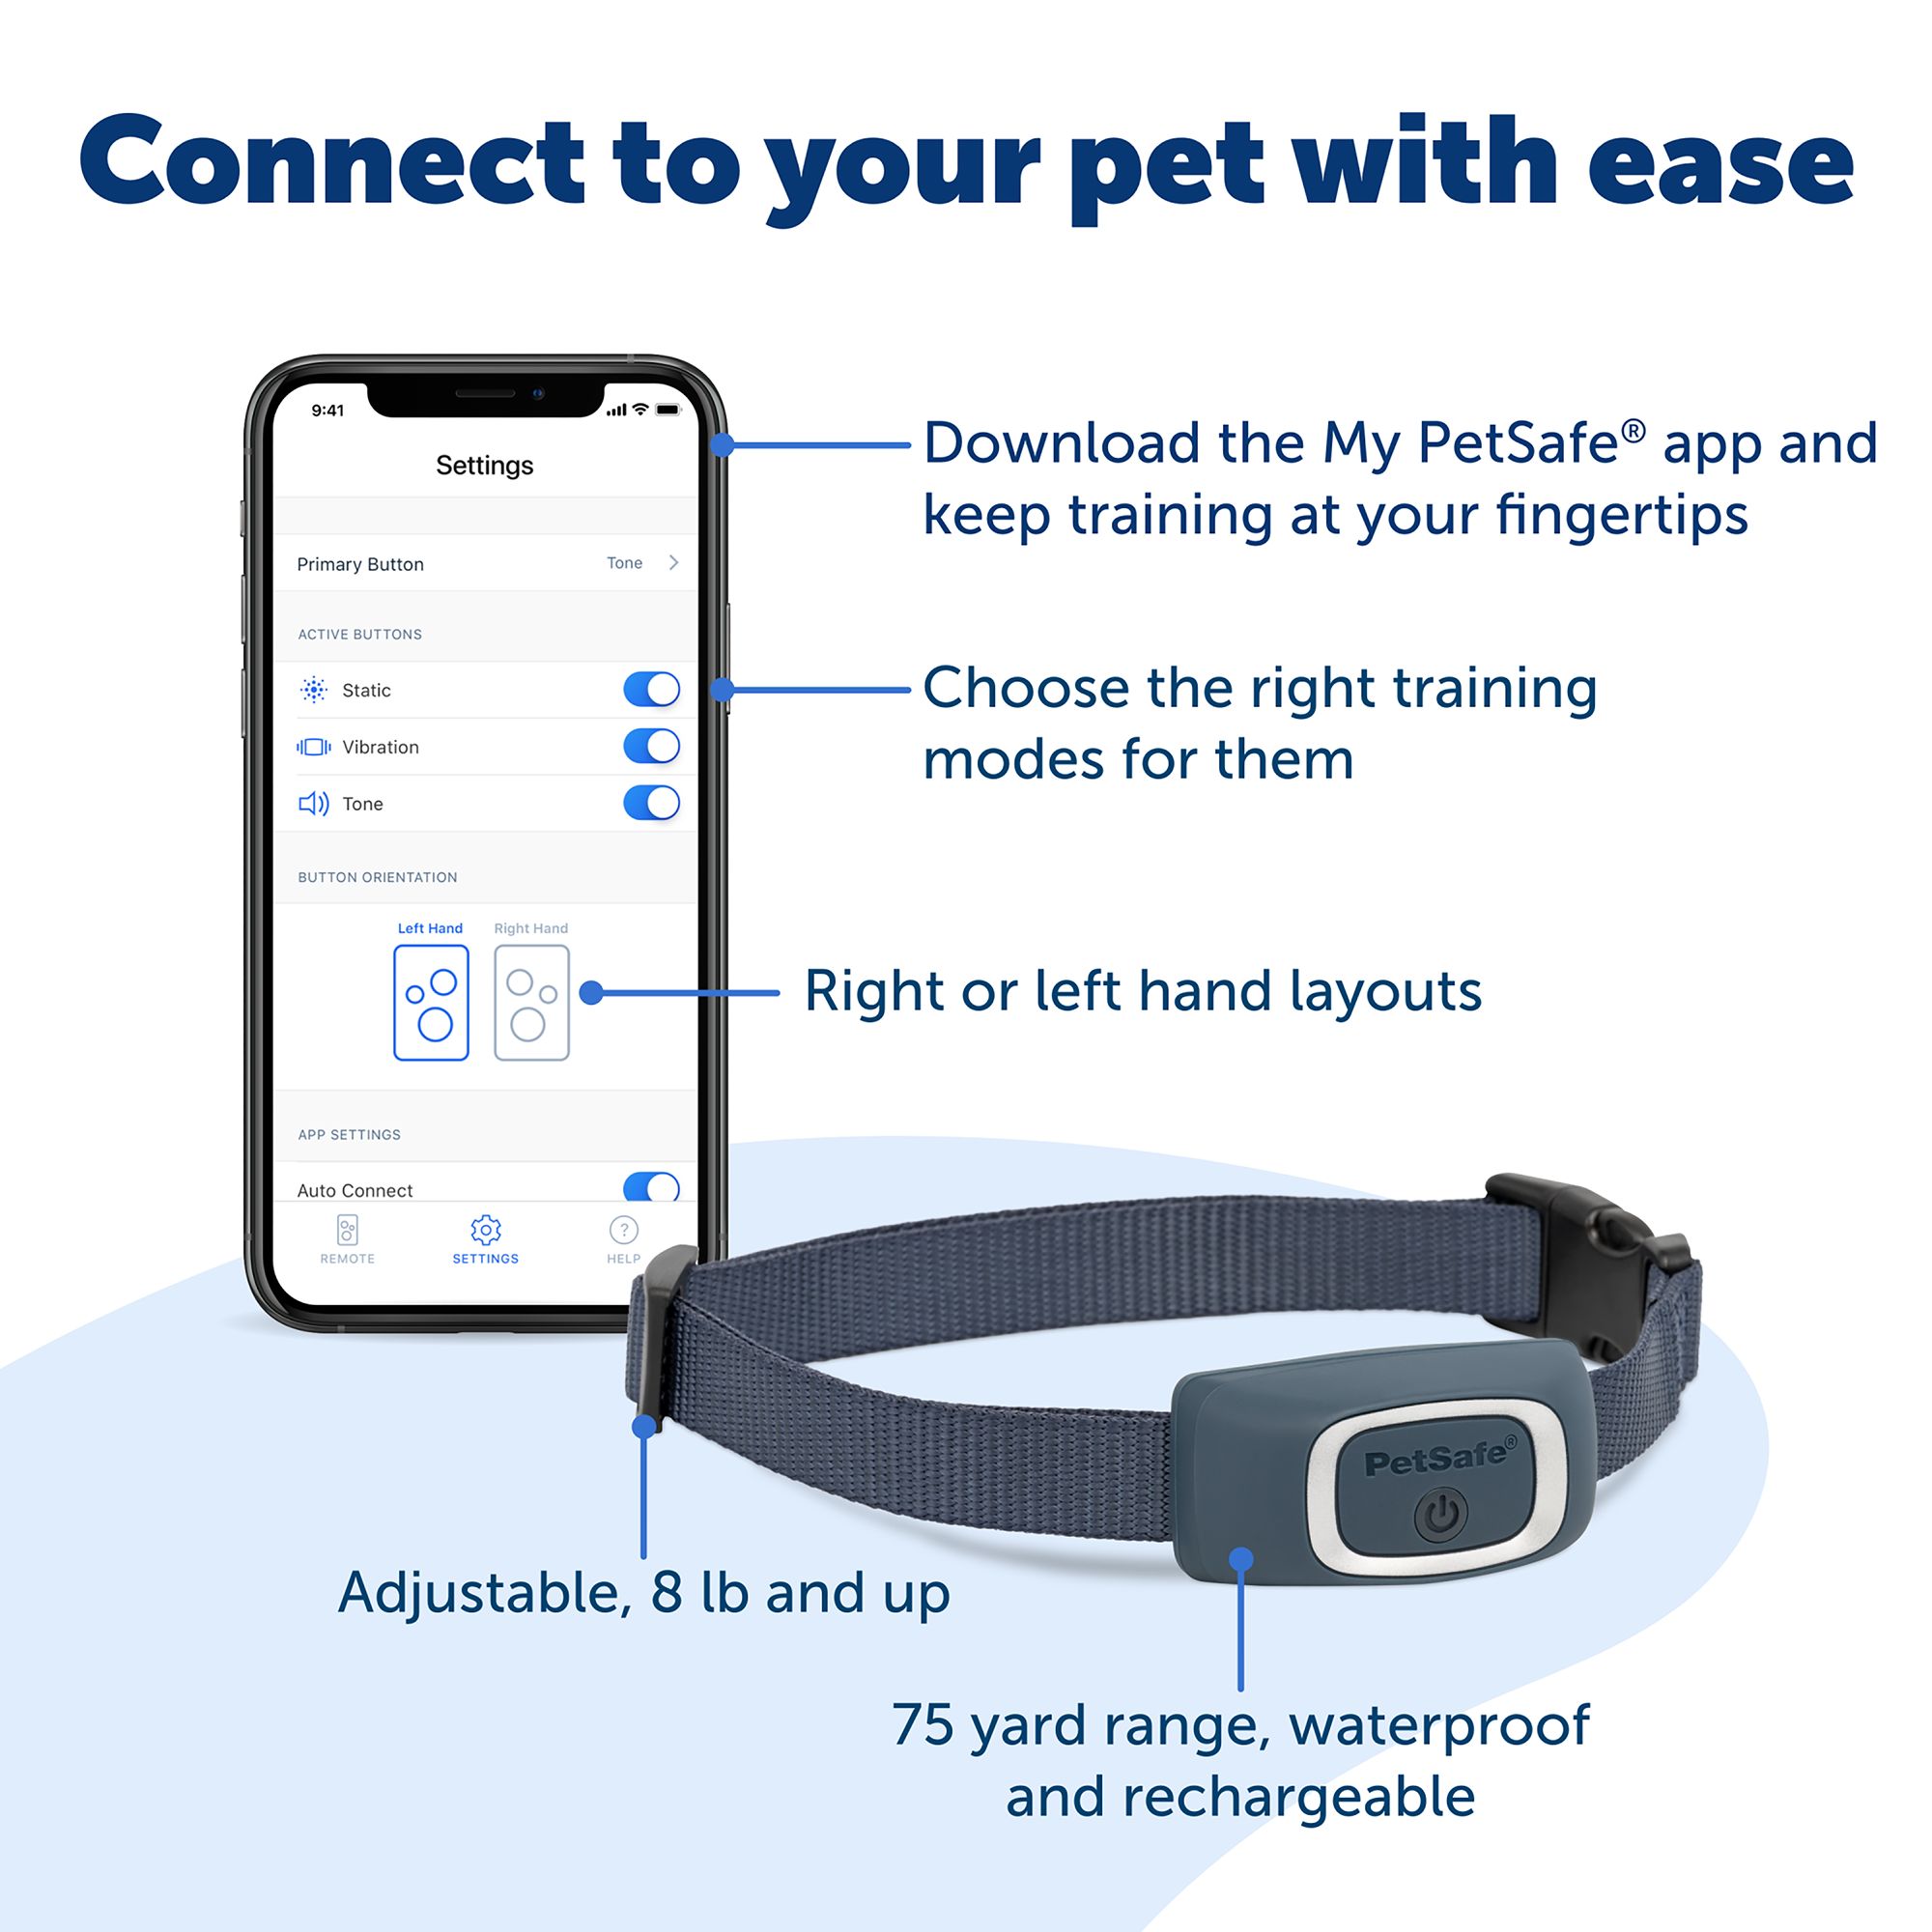 petsafe smart dog trainer pin reset